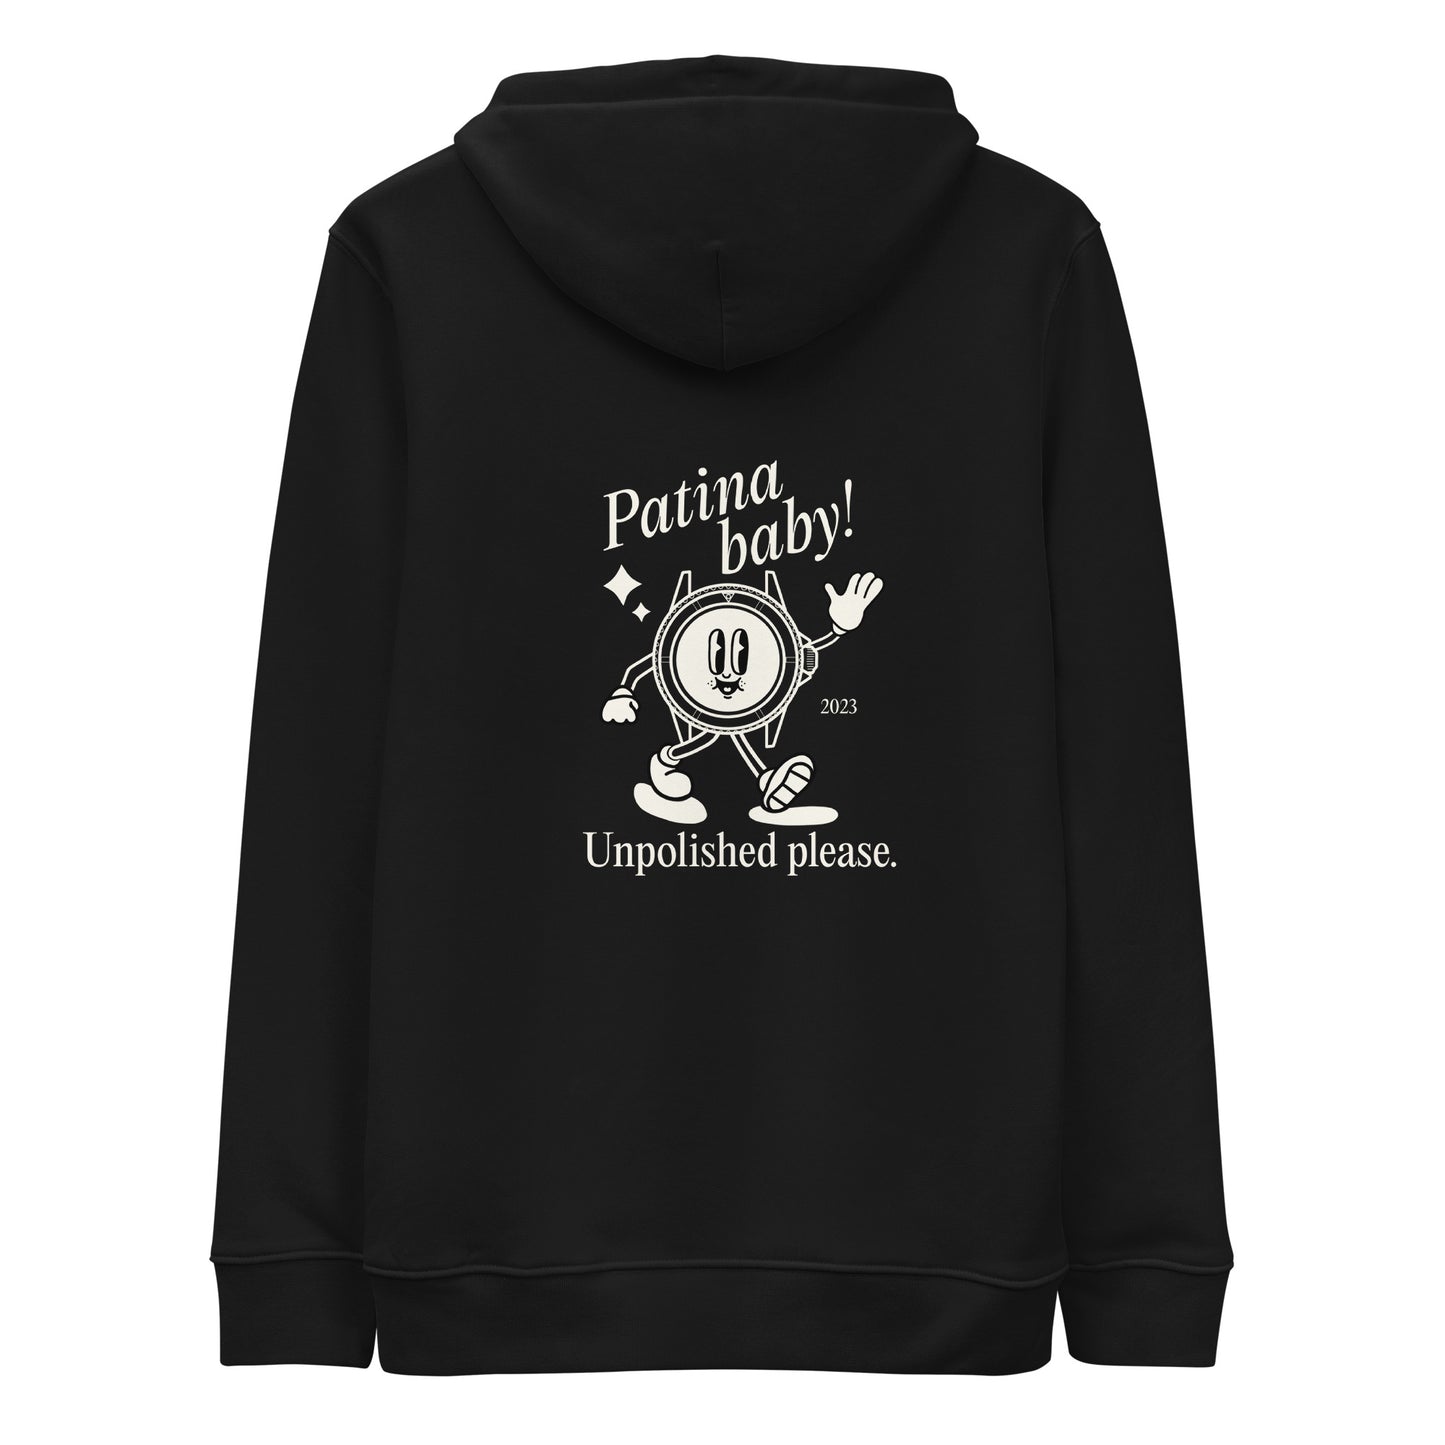 Unpolished please hoodie 2023 Edition